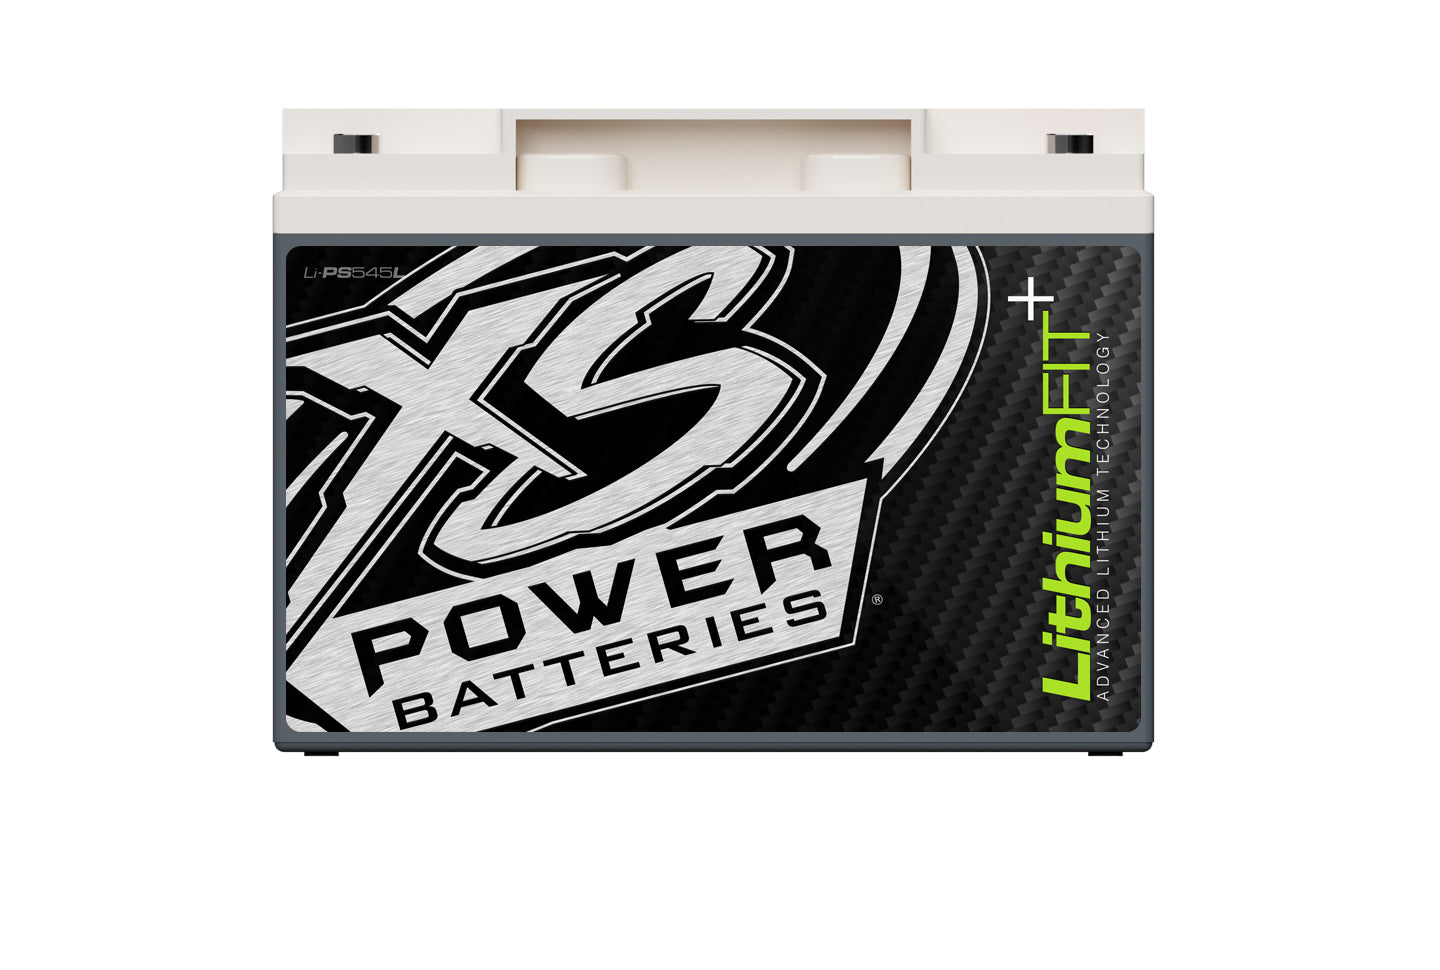 Li-PS545L XS Power 12VDC Lithium Powersports Vehicle Battery 240A 13.2AhAh